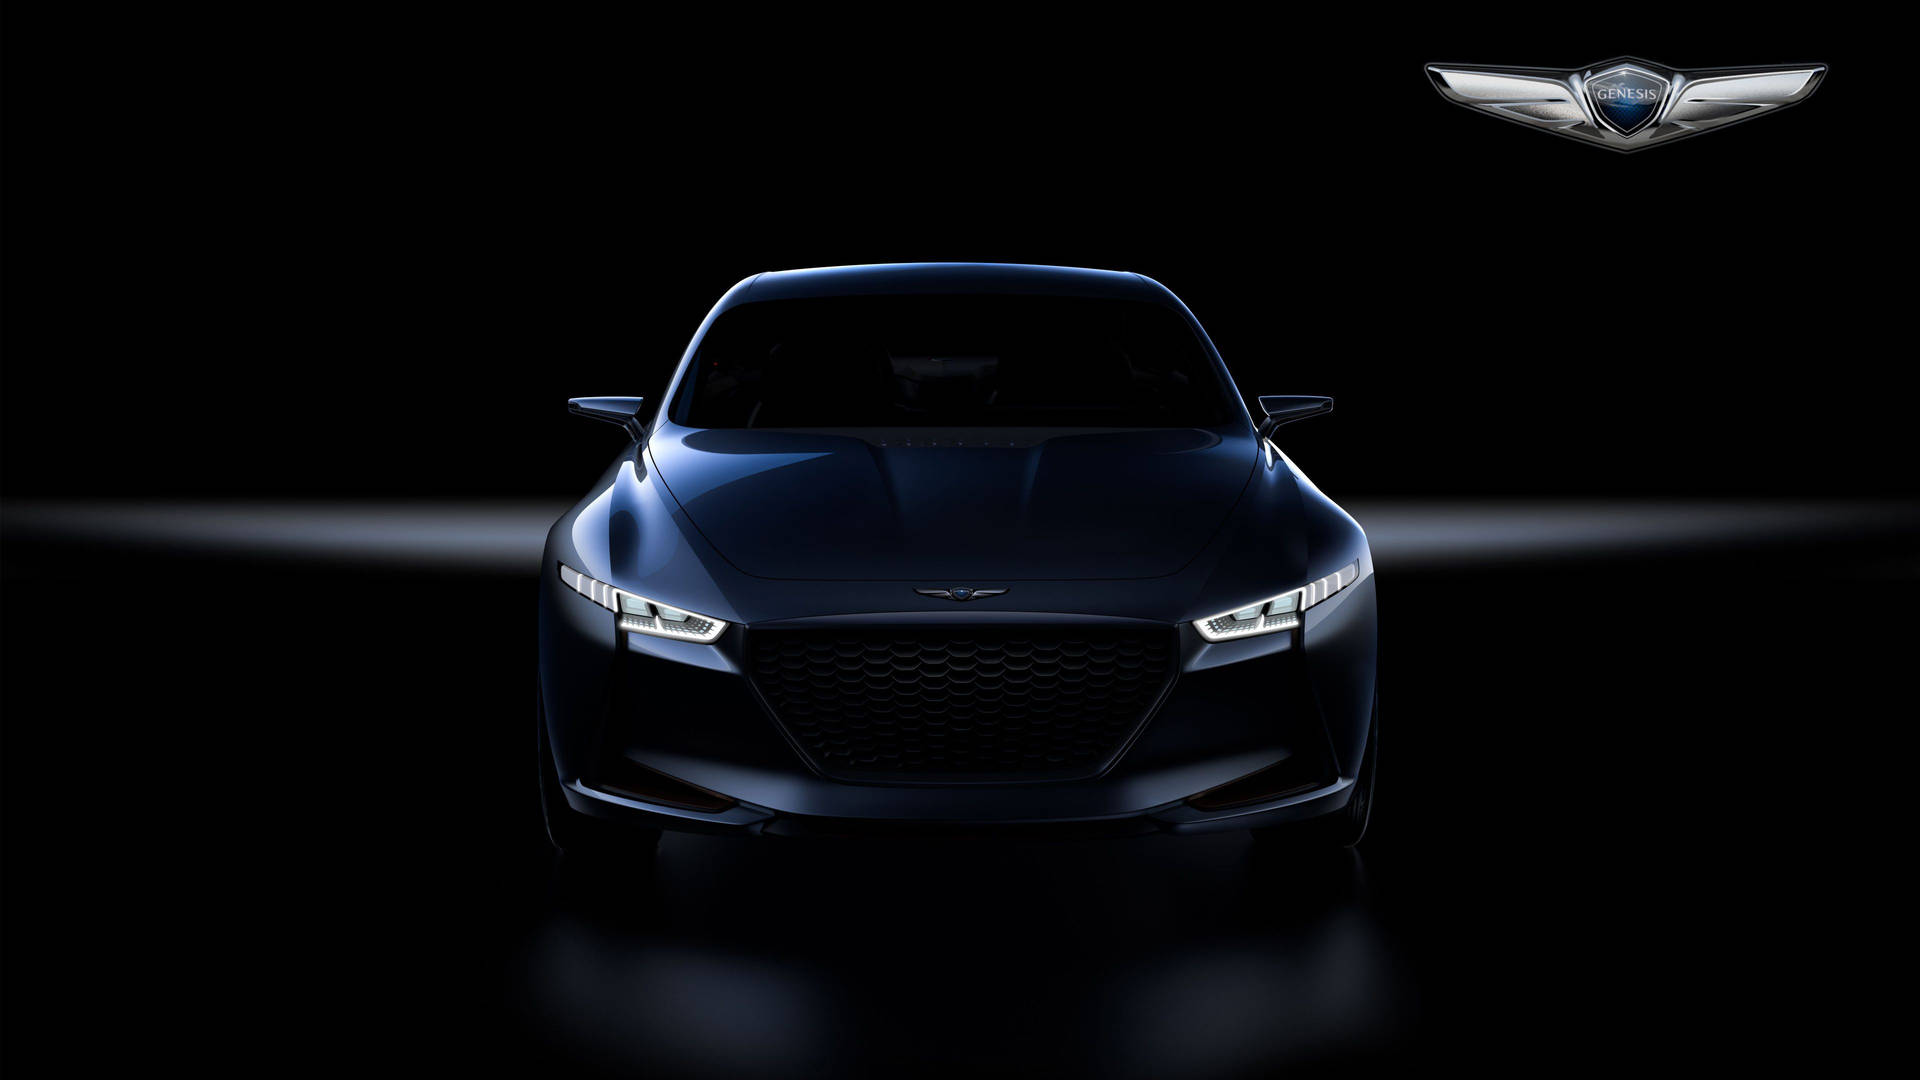 Download Hyundai Genesis Concept Car Background | ManyBackgrounds.com